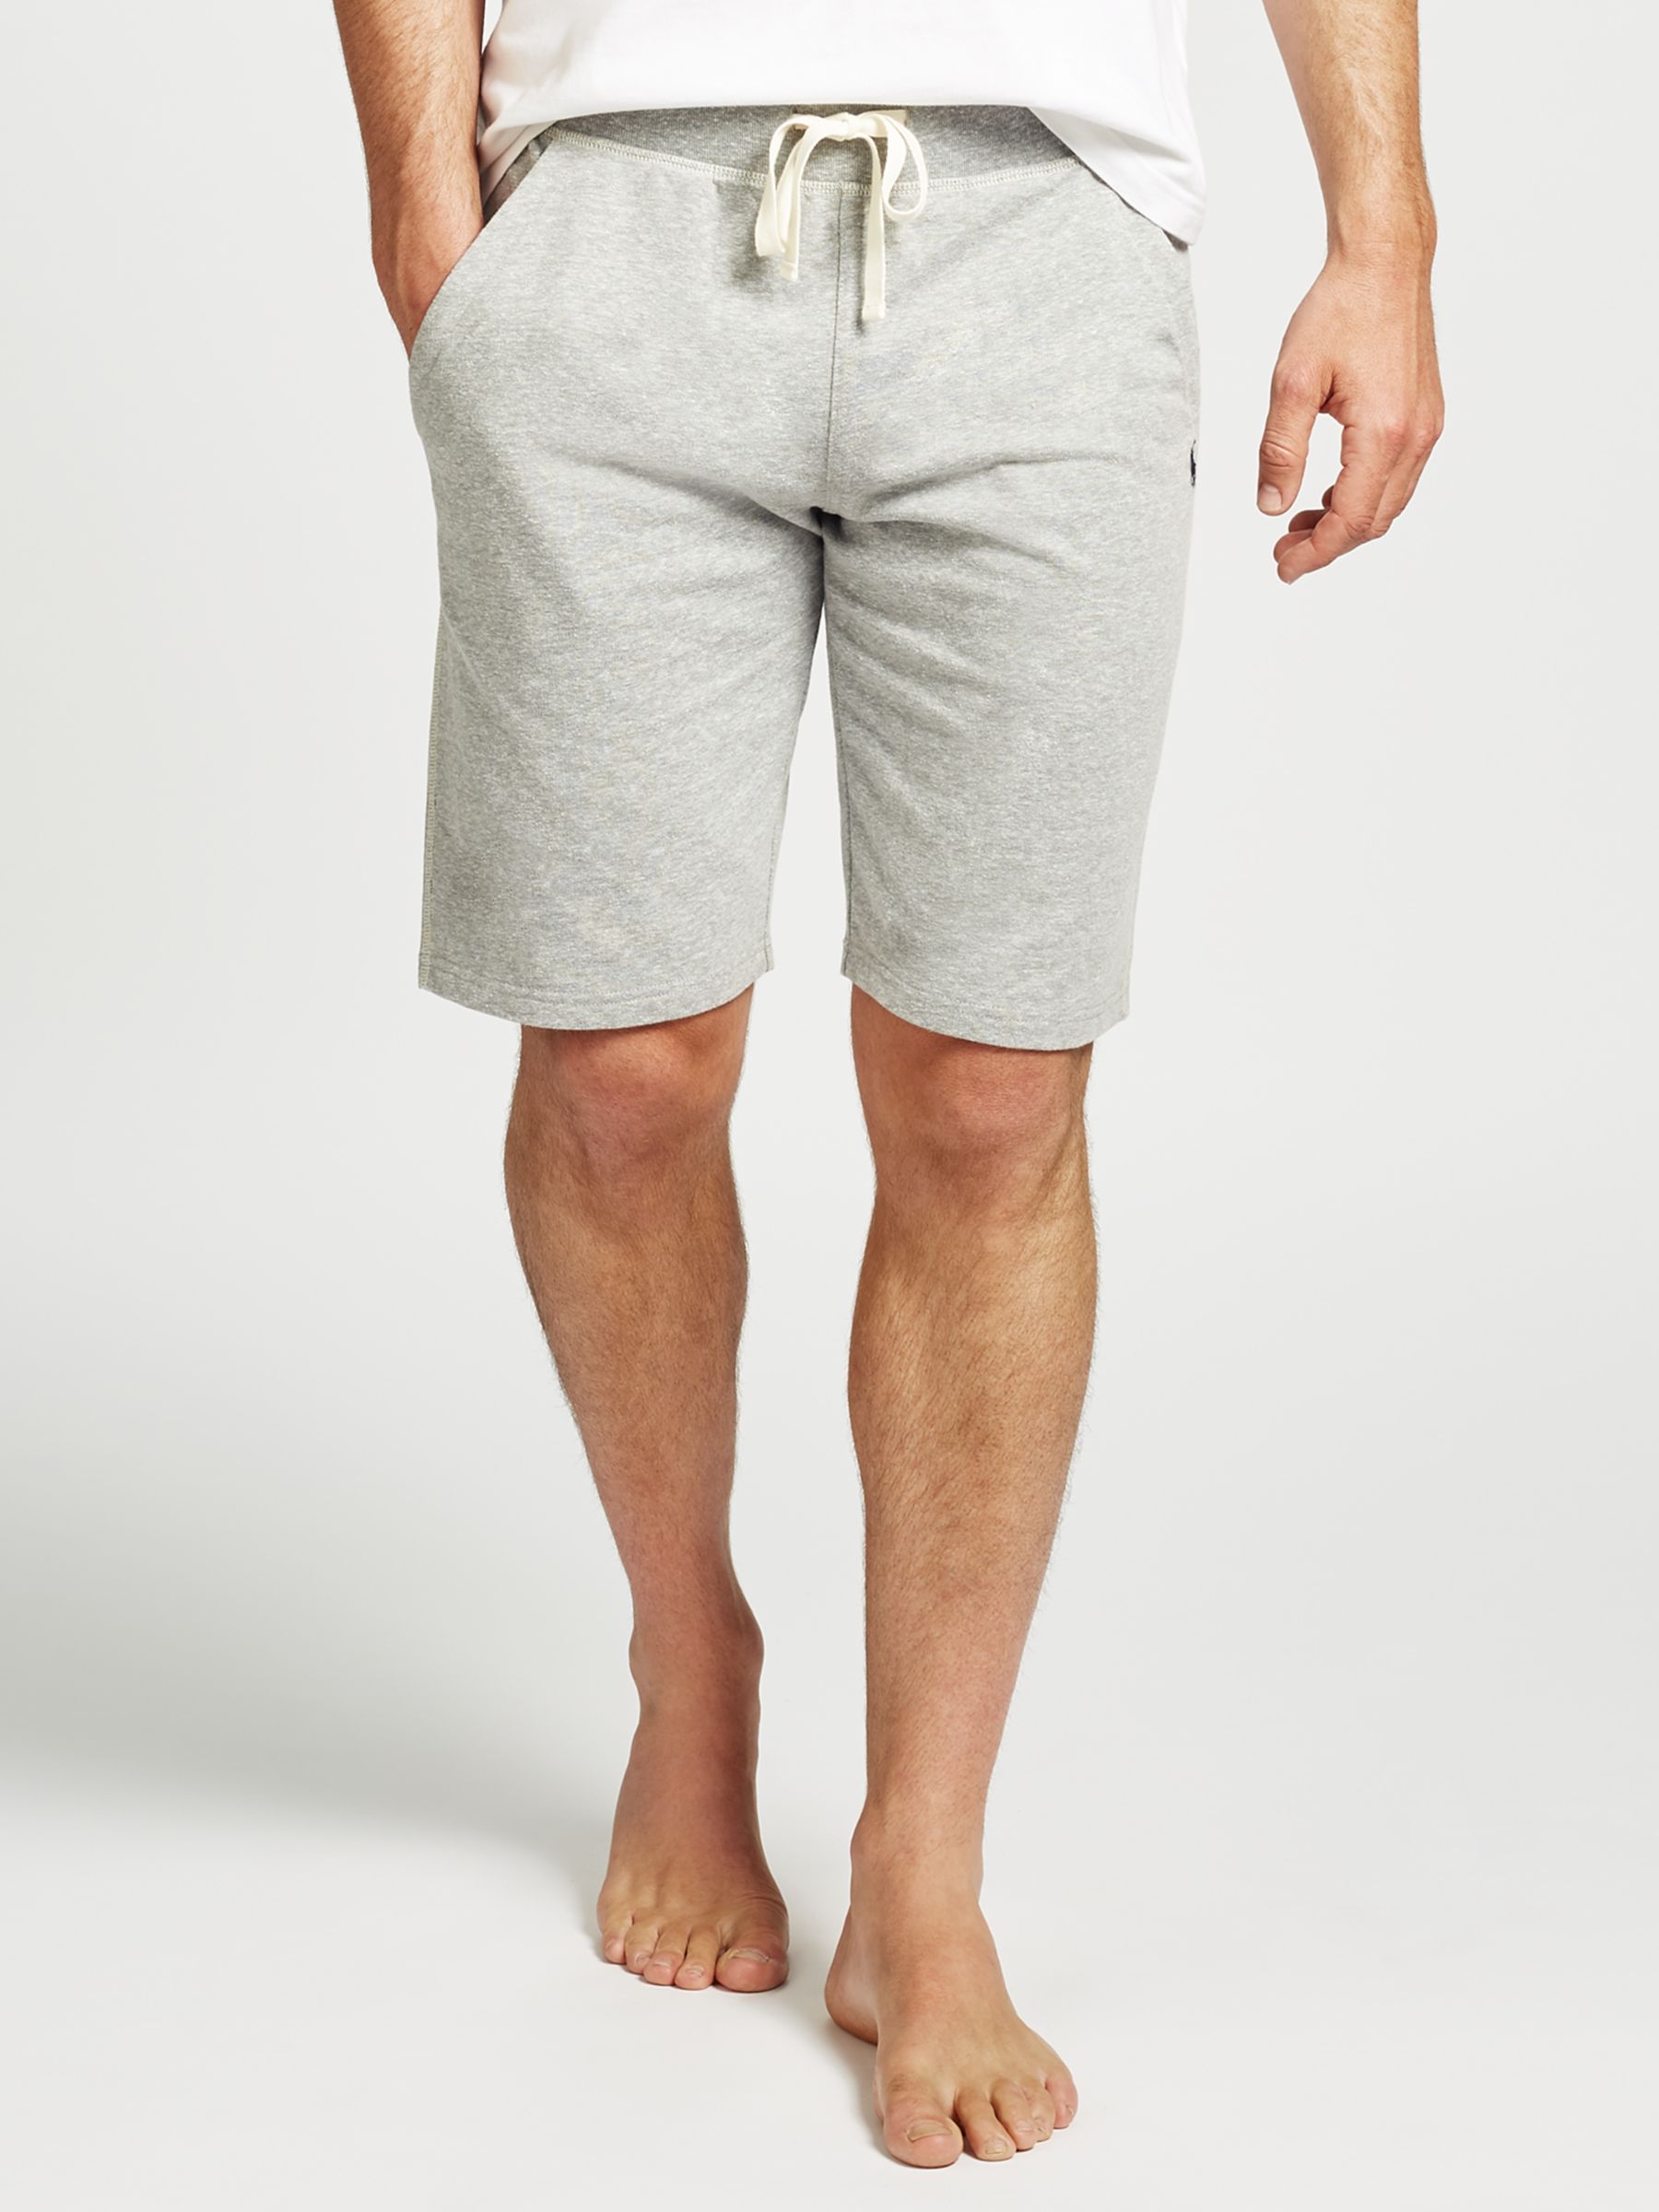 ralph lauren shorts grey